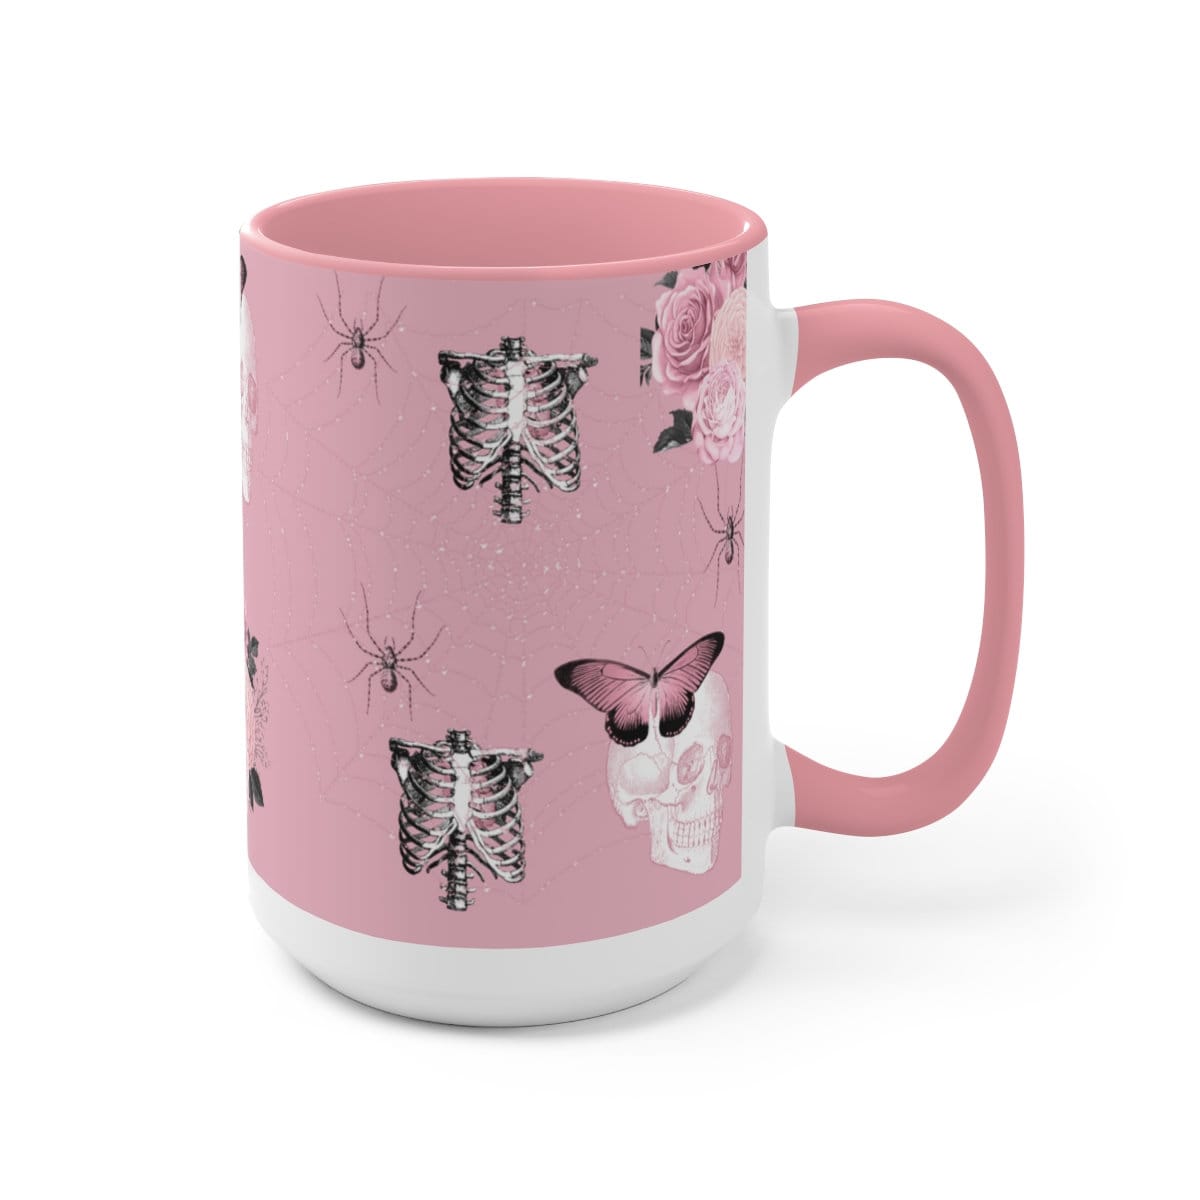 Spooky fall coffee mug - gothic rose, skeleton & spiders - 15 oz ceramic coffee mug